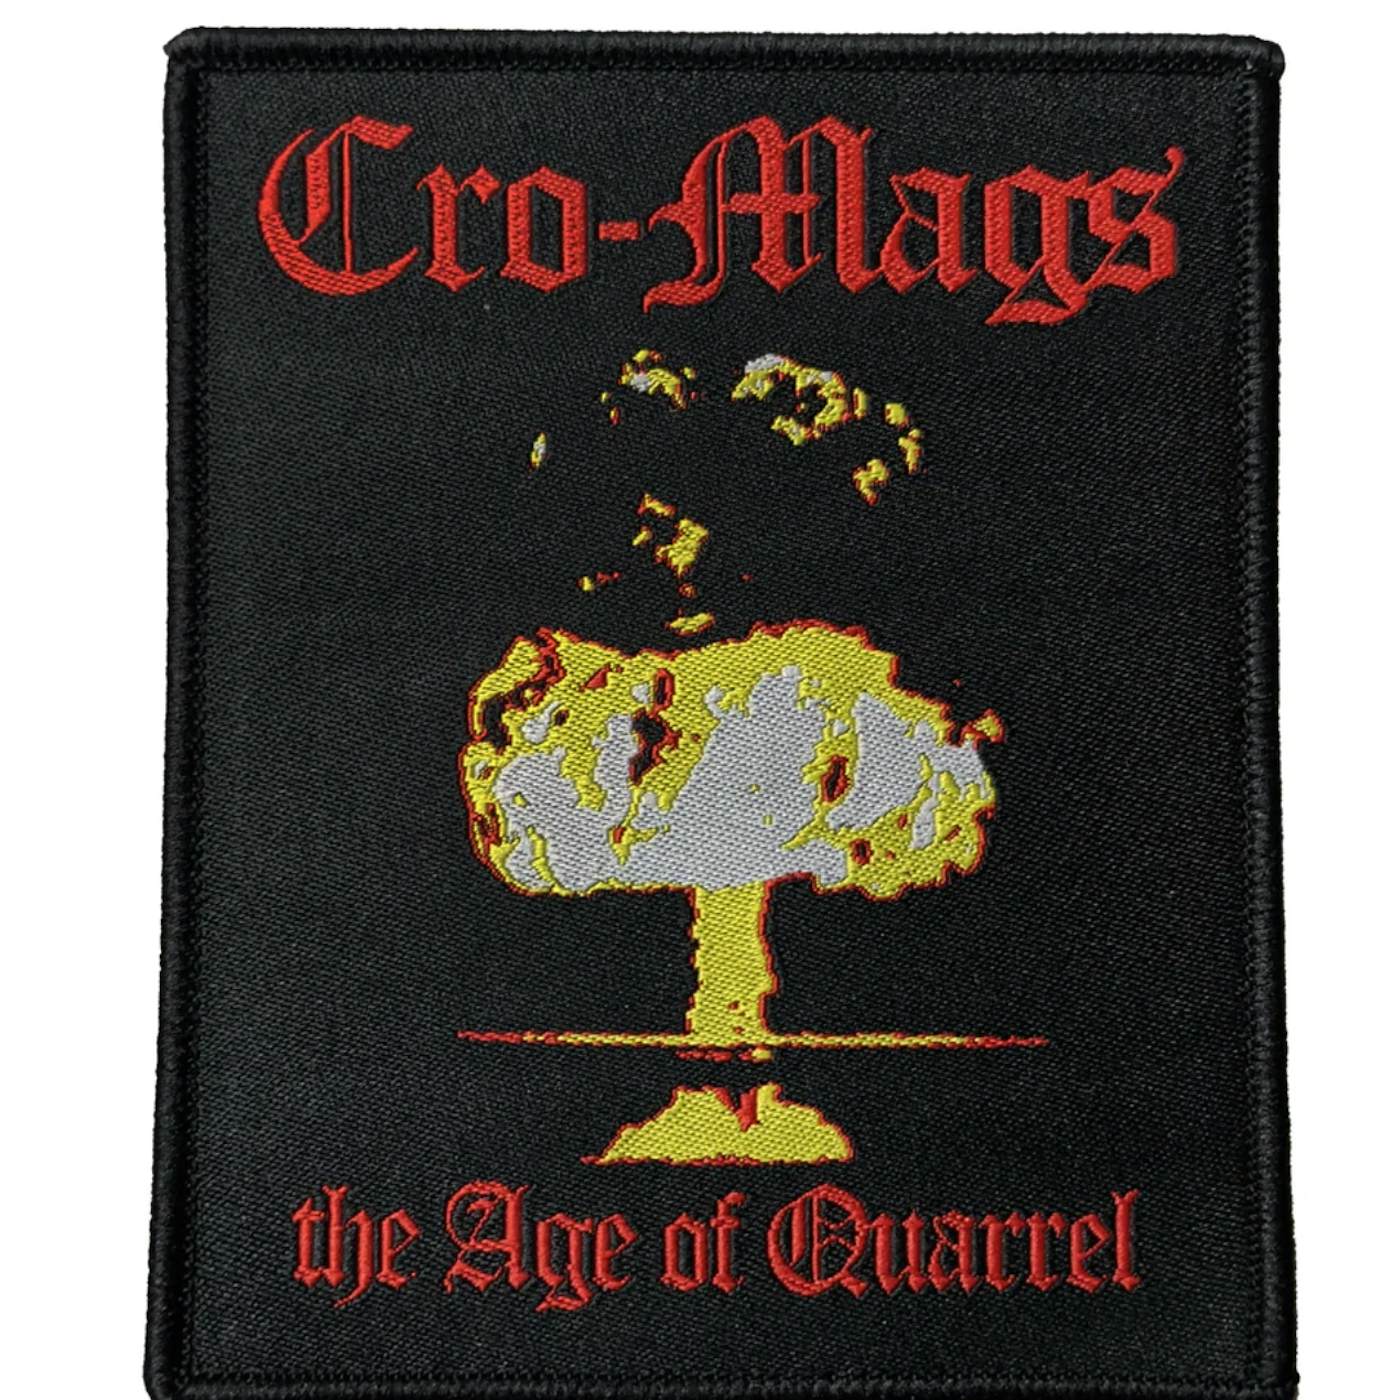 Cro-Mags "Age Of Quarrel " Patch